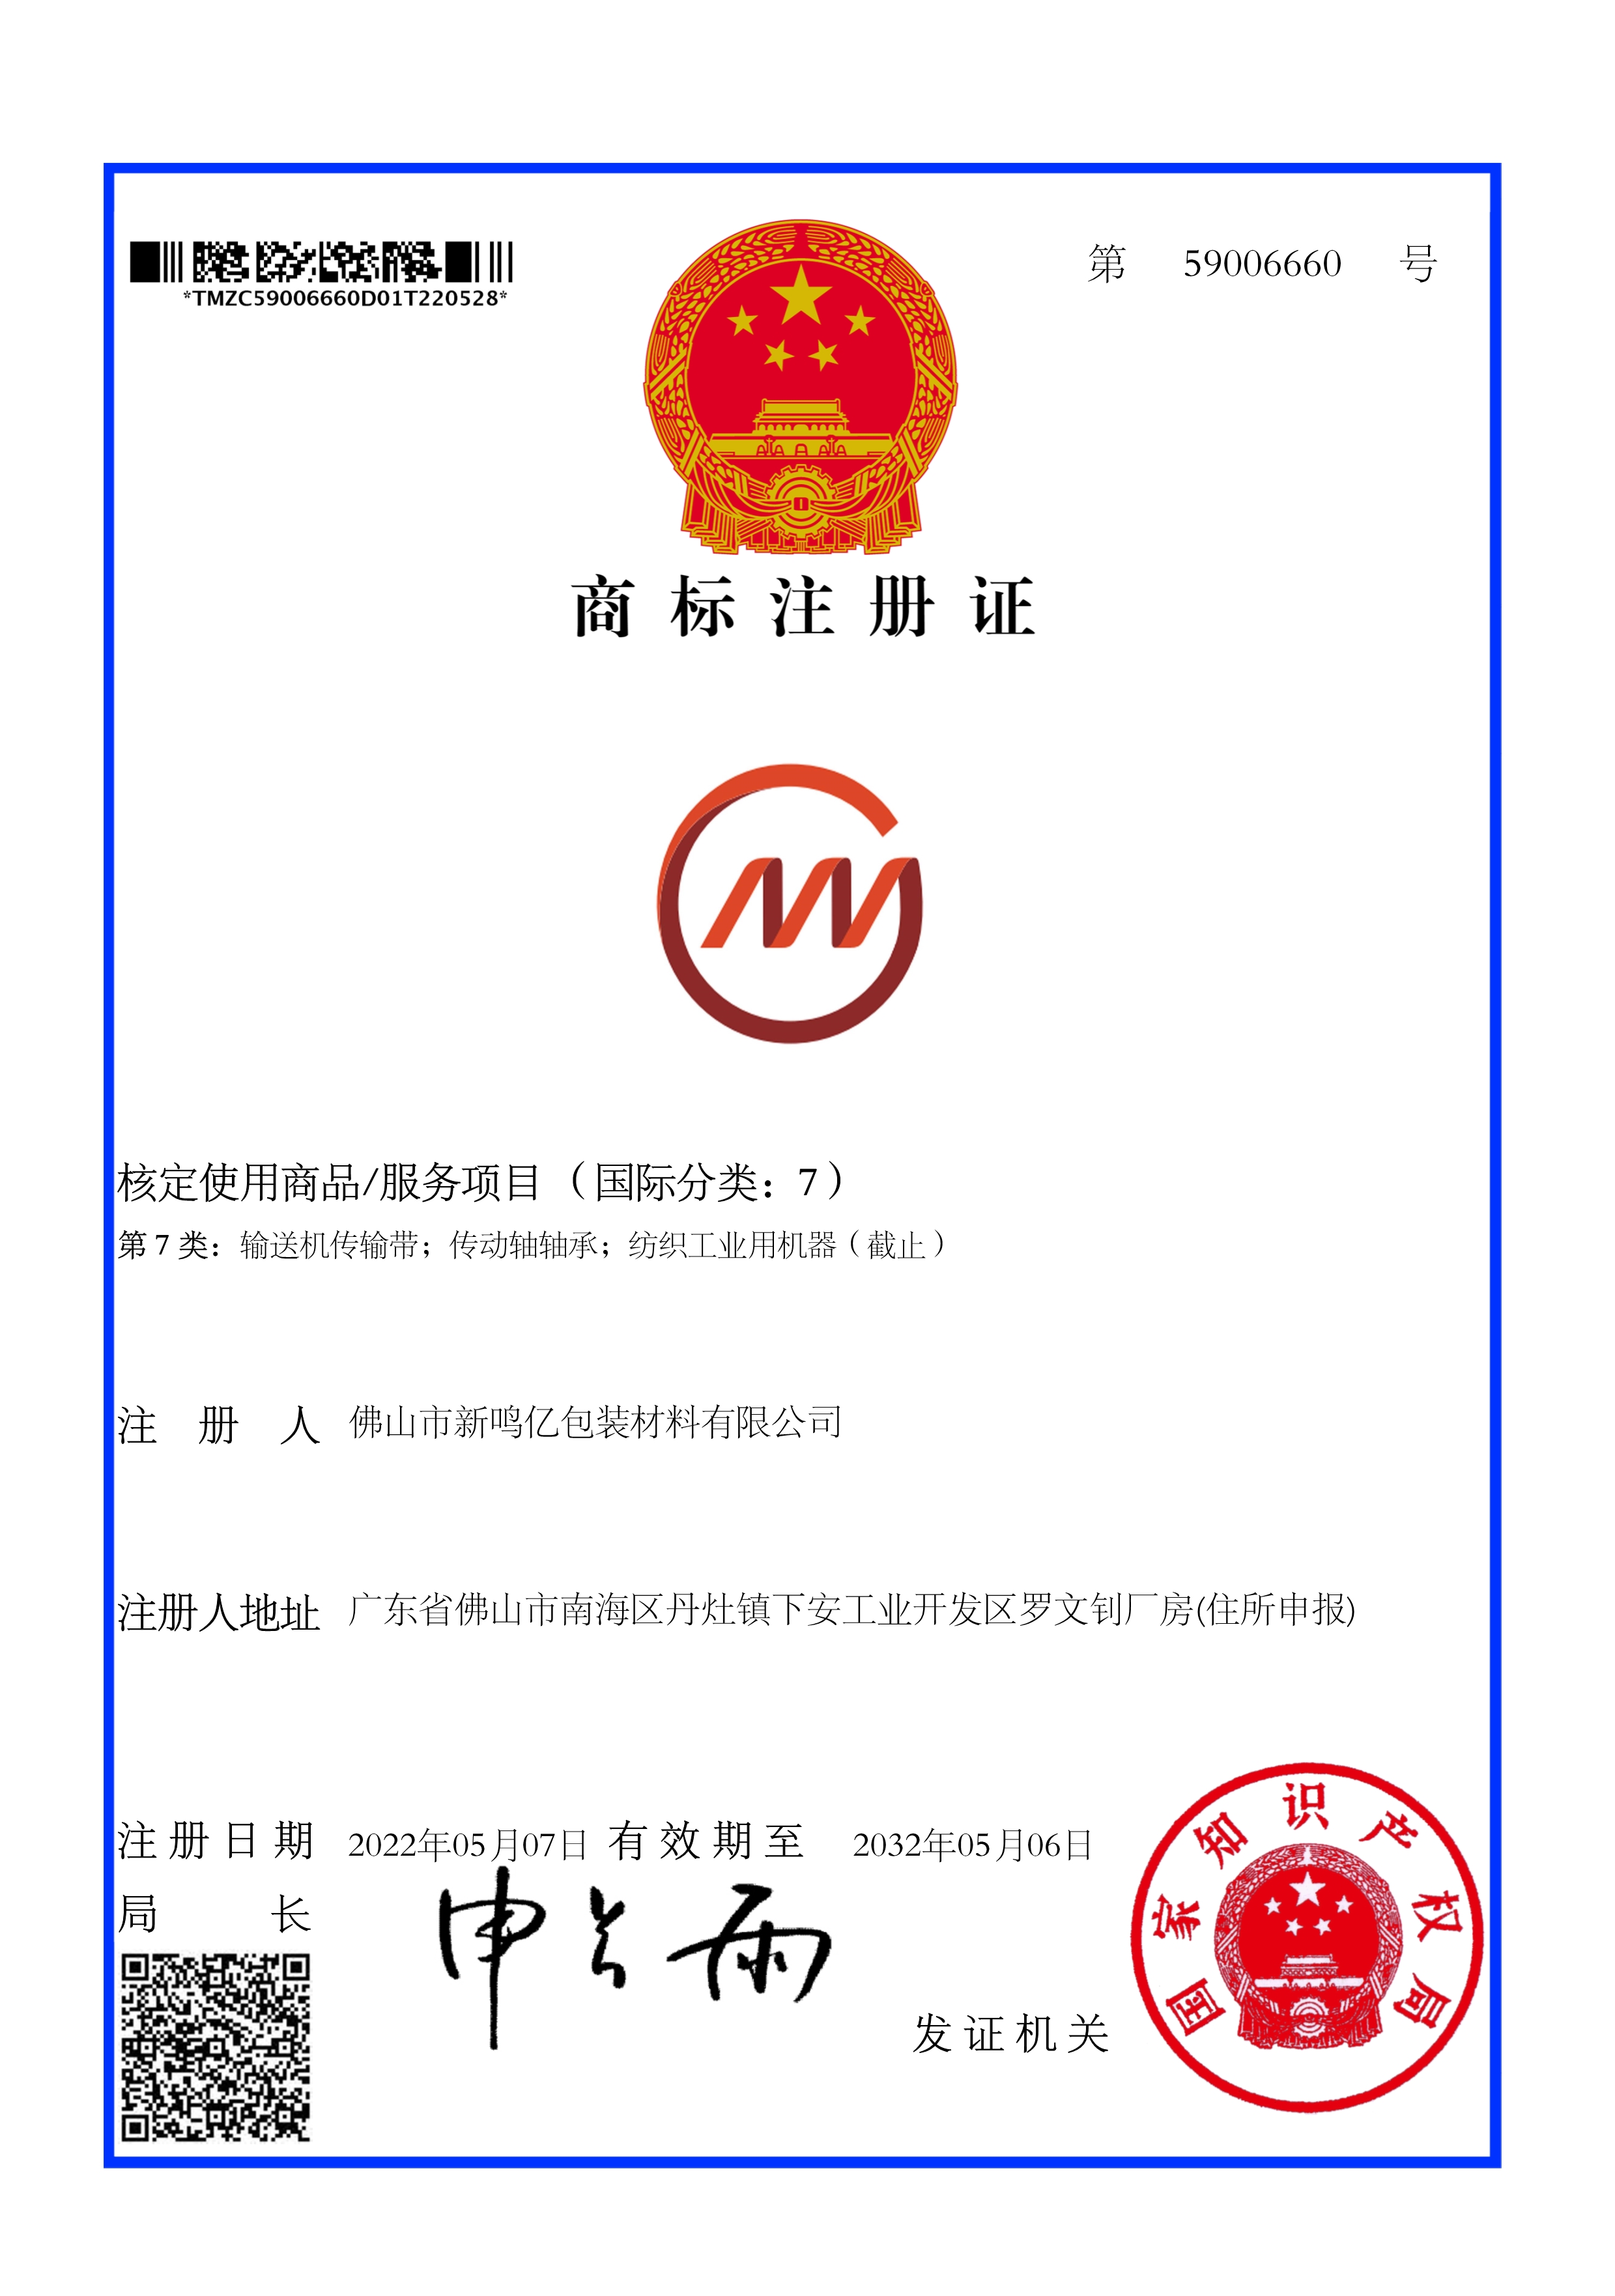 Foshan Xinmingyi Packaging Materials Co., Ltd. successfully registered the trademark